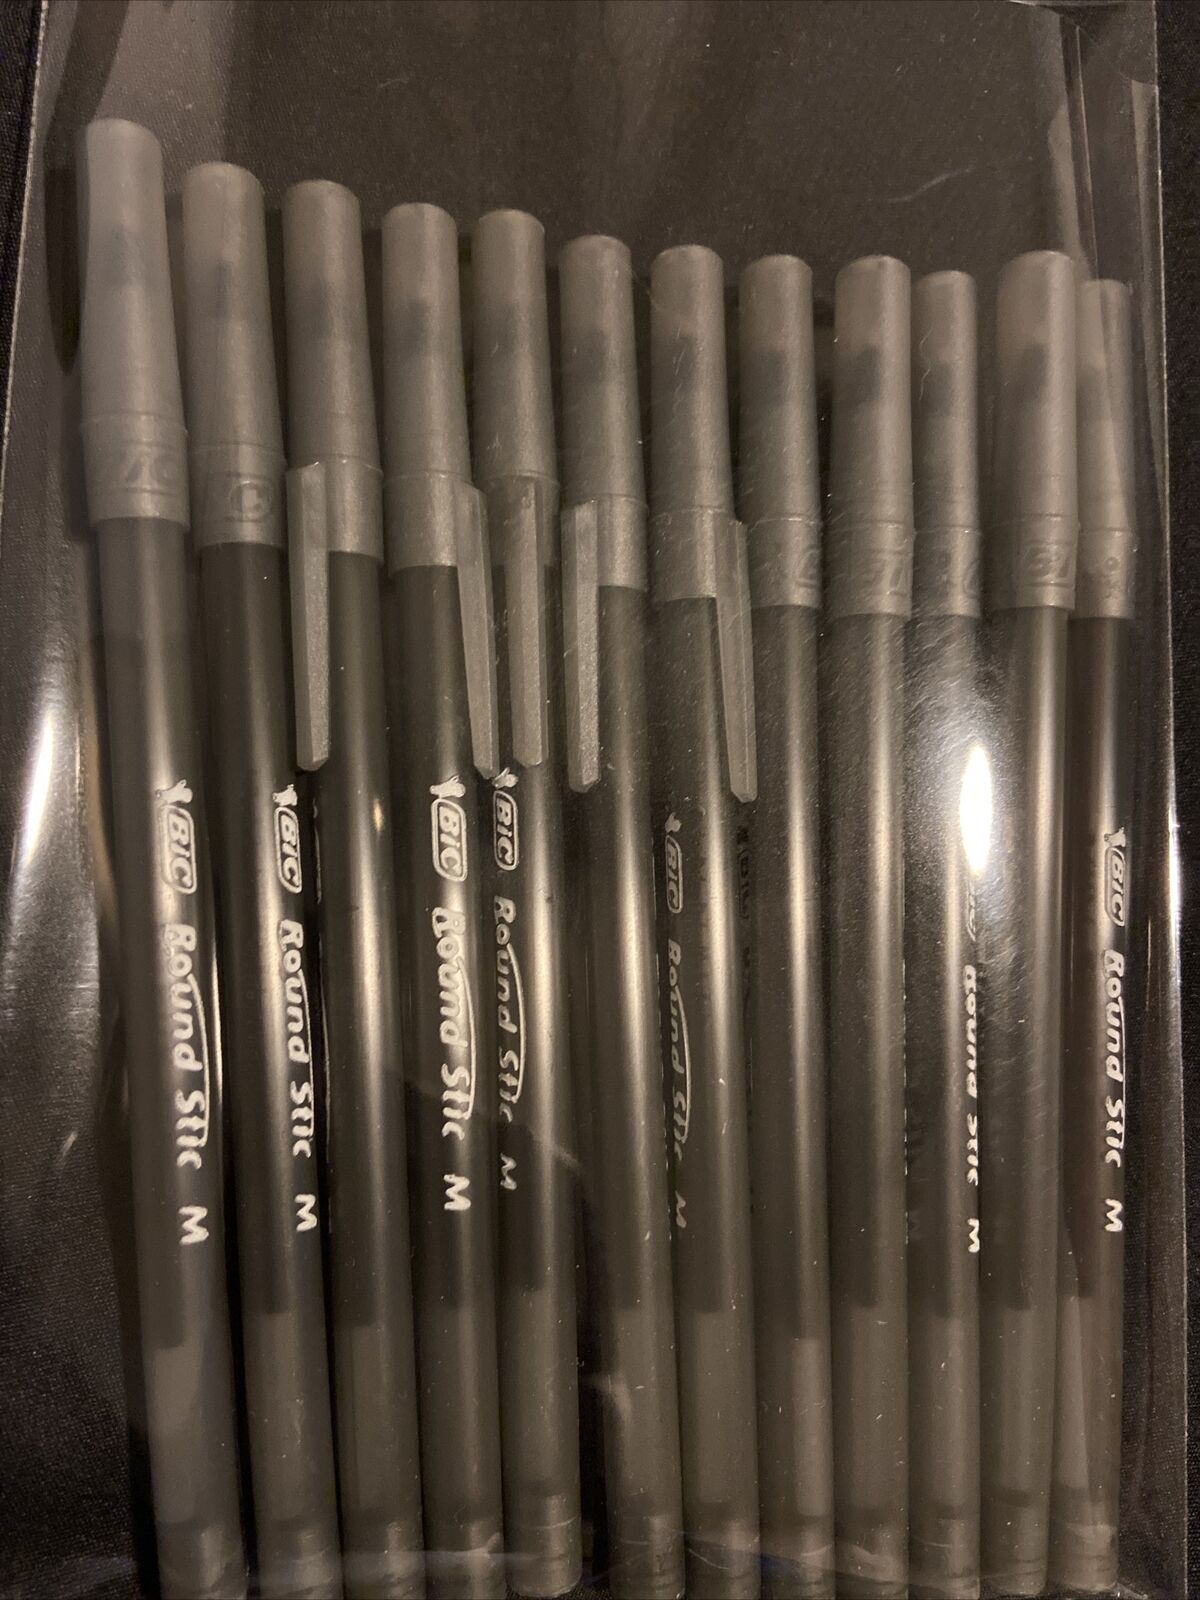 New BIC Round Stick Xtra Life Ballpoint Pens, Medium Point, Black Ink, 12 Count